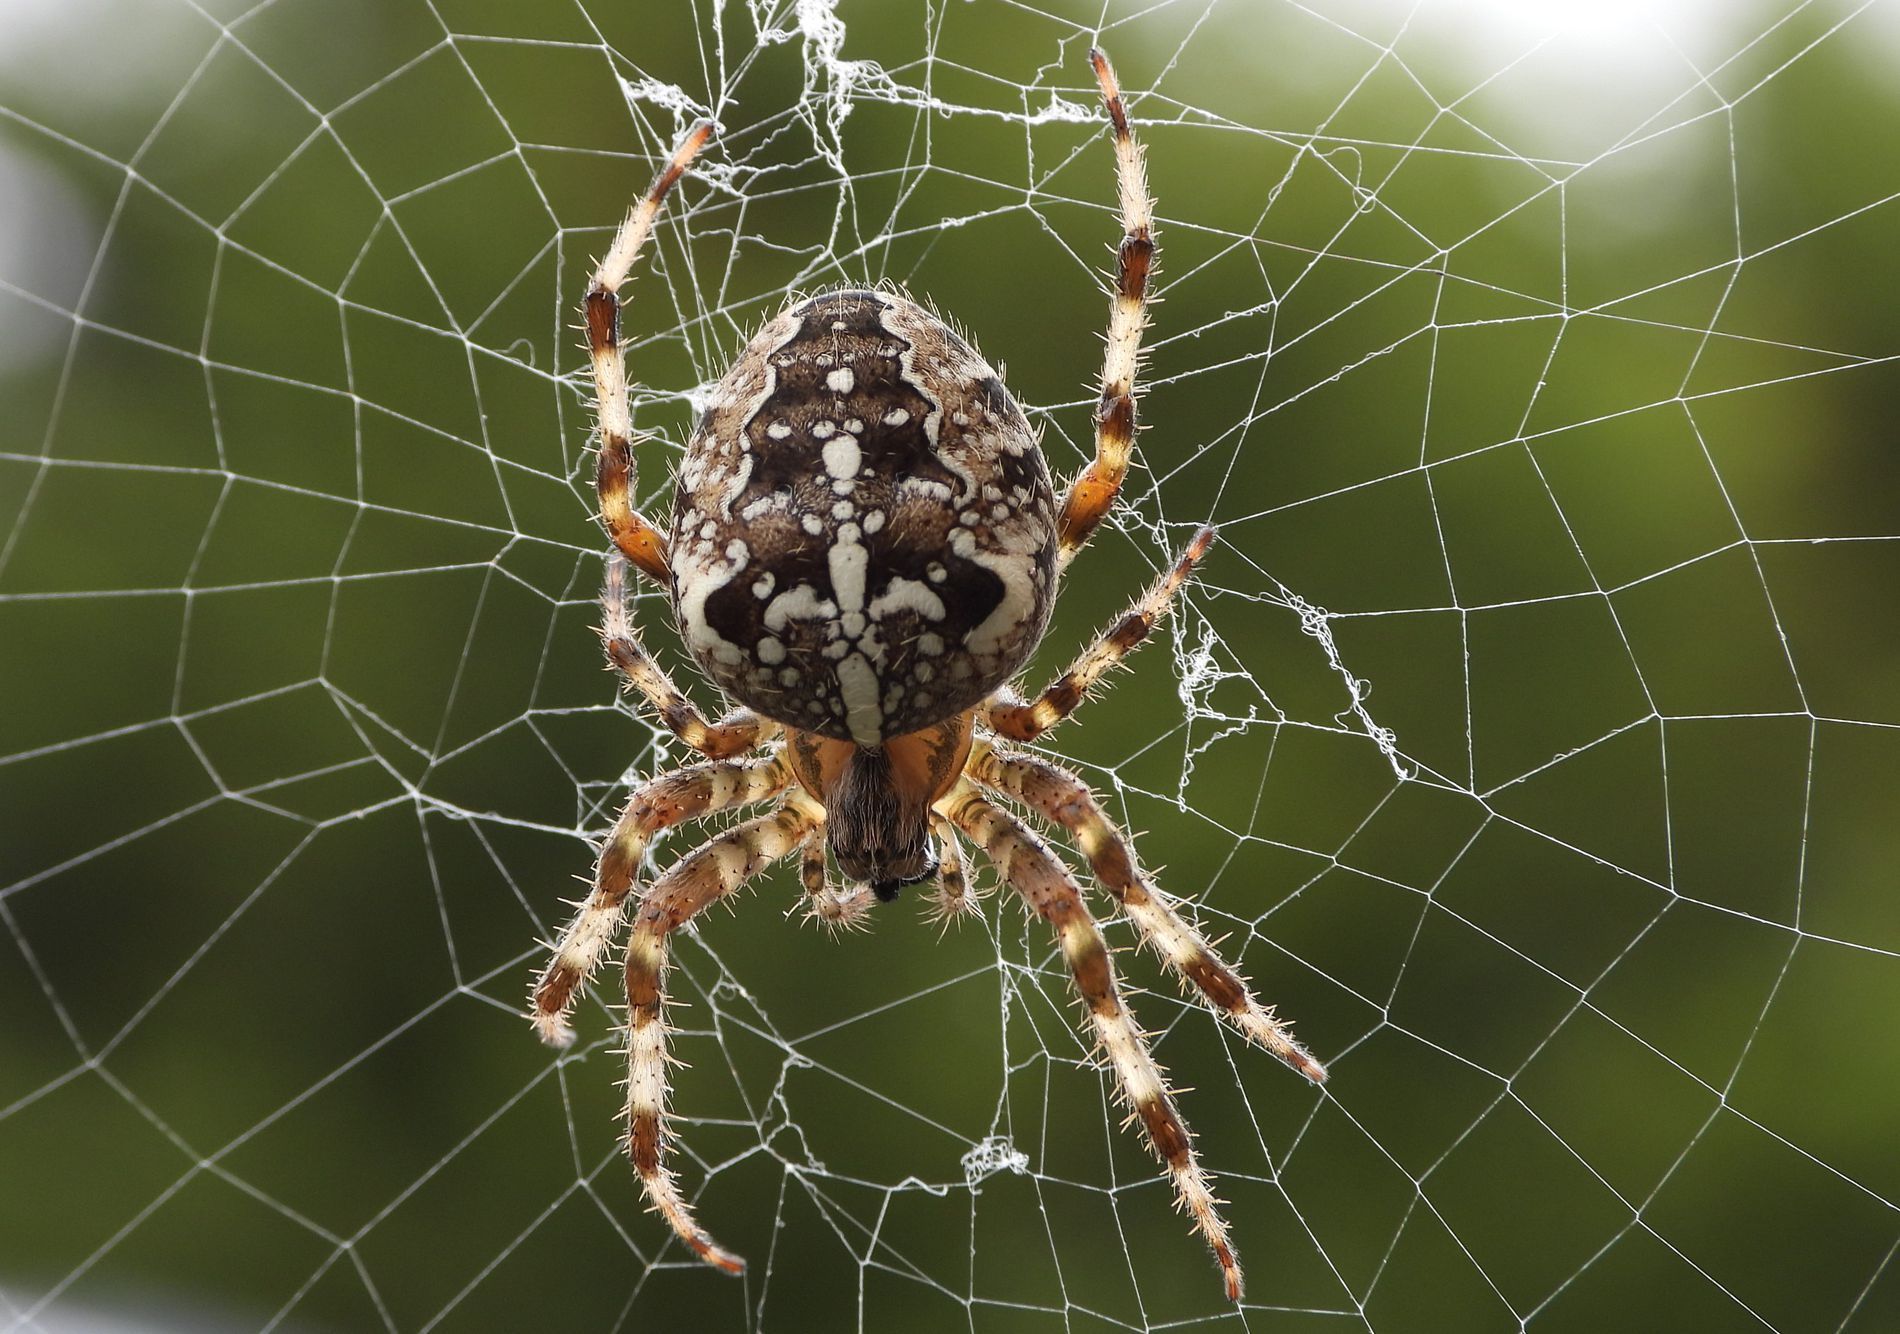 Common Garden Spider Uk By Rick Wilkinson